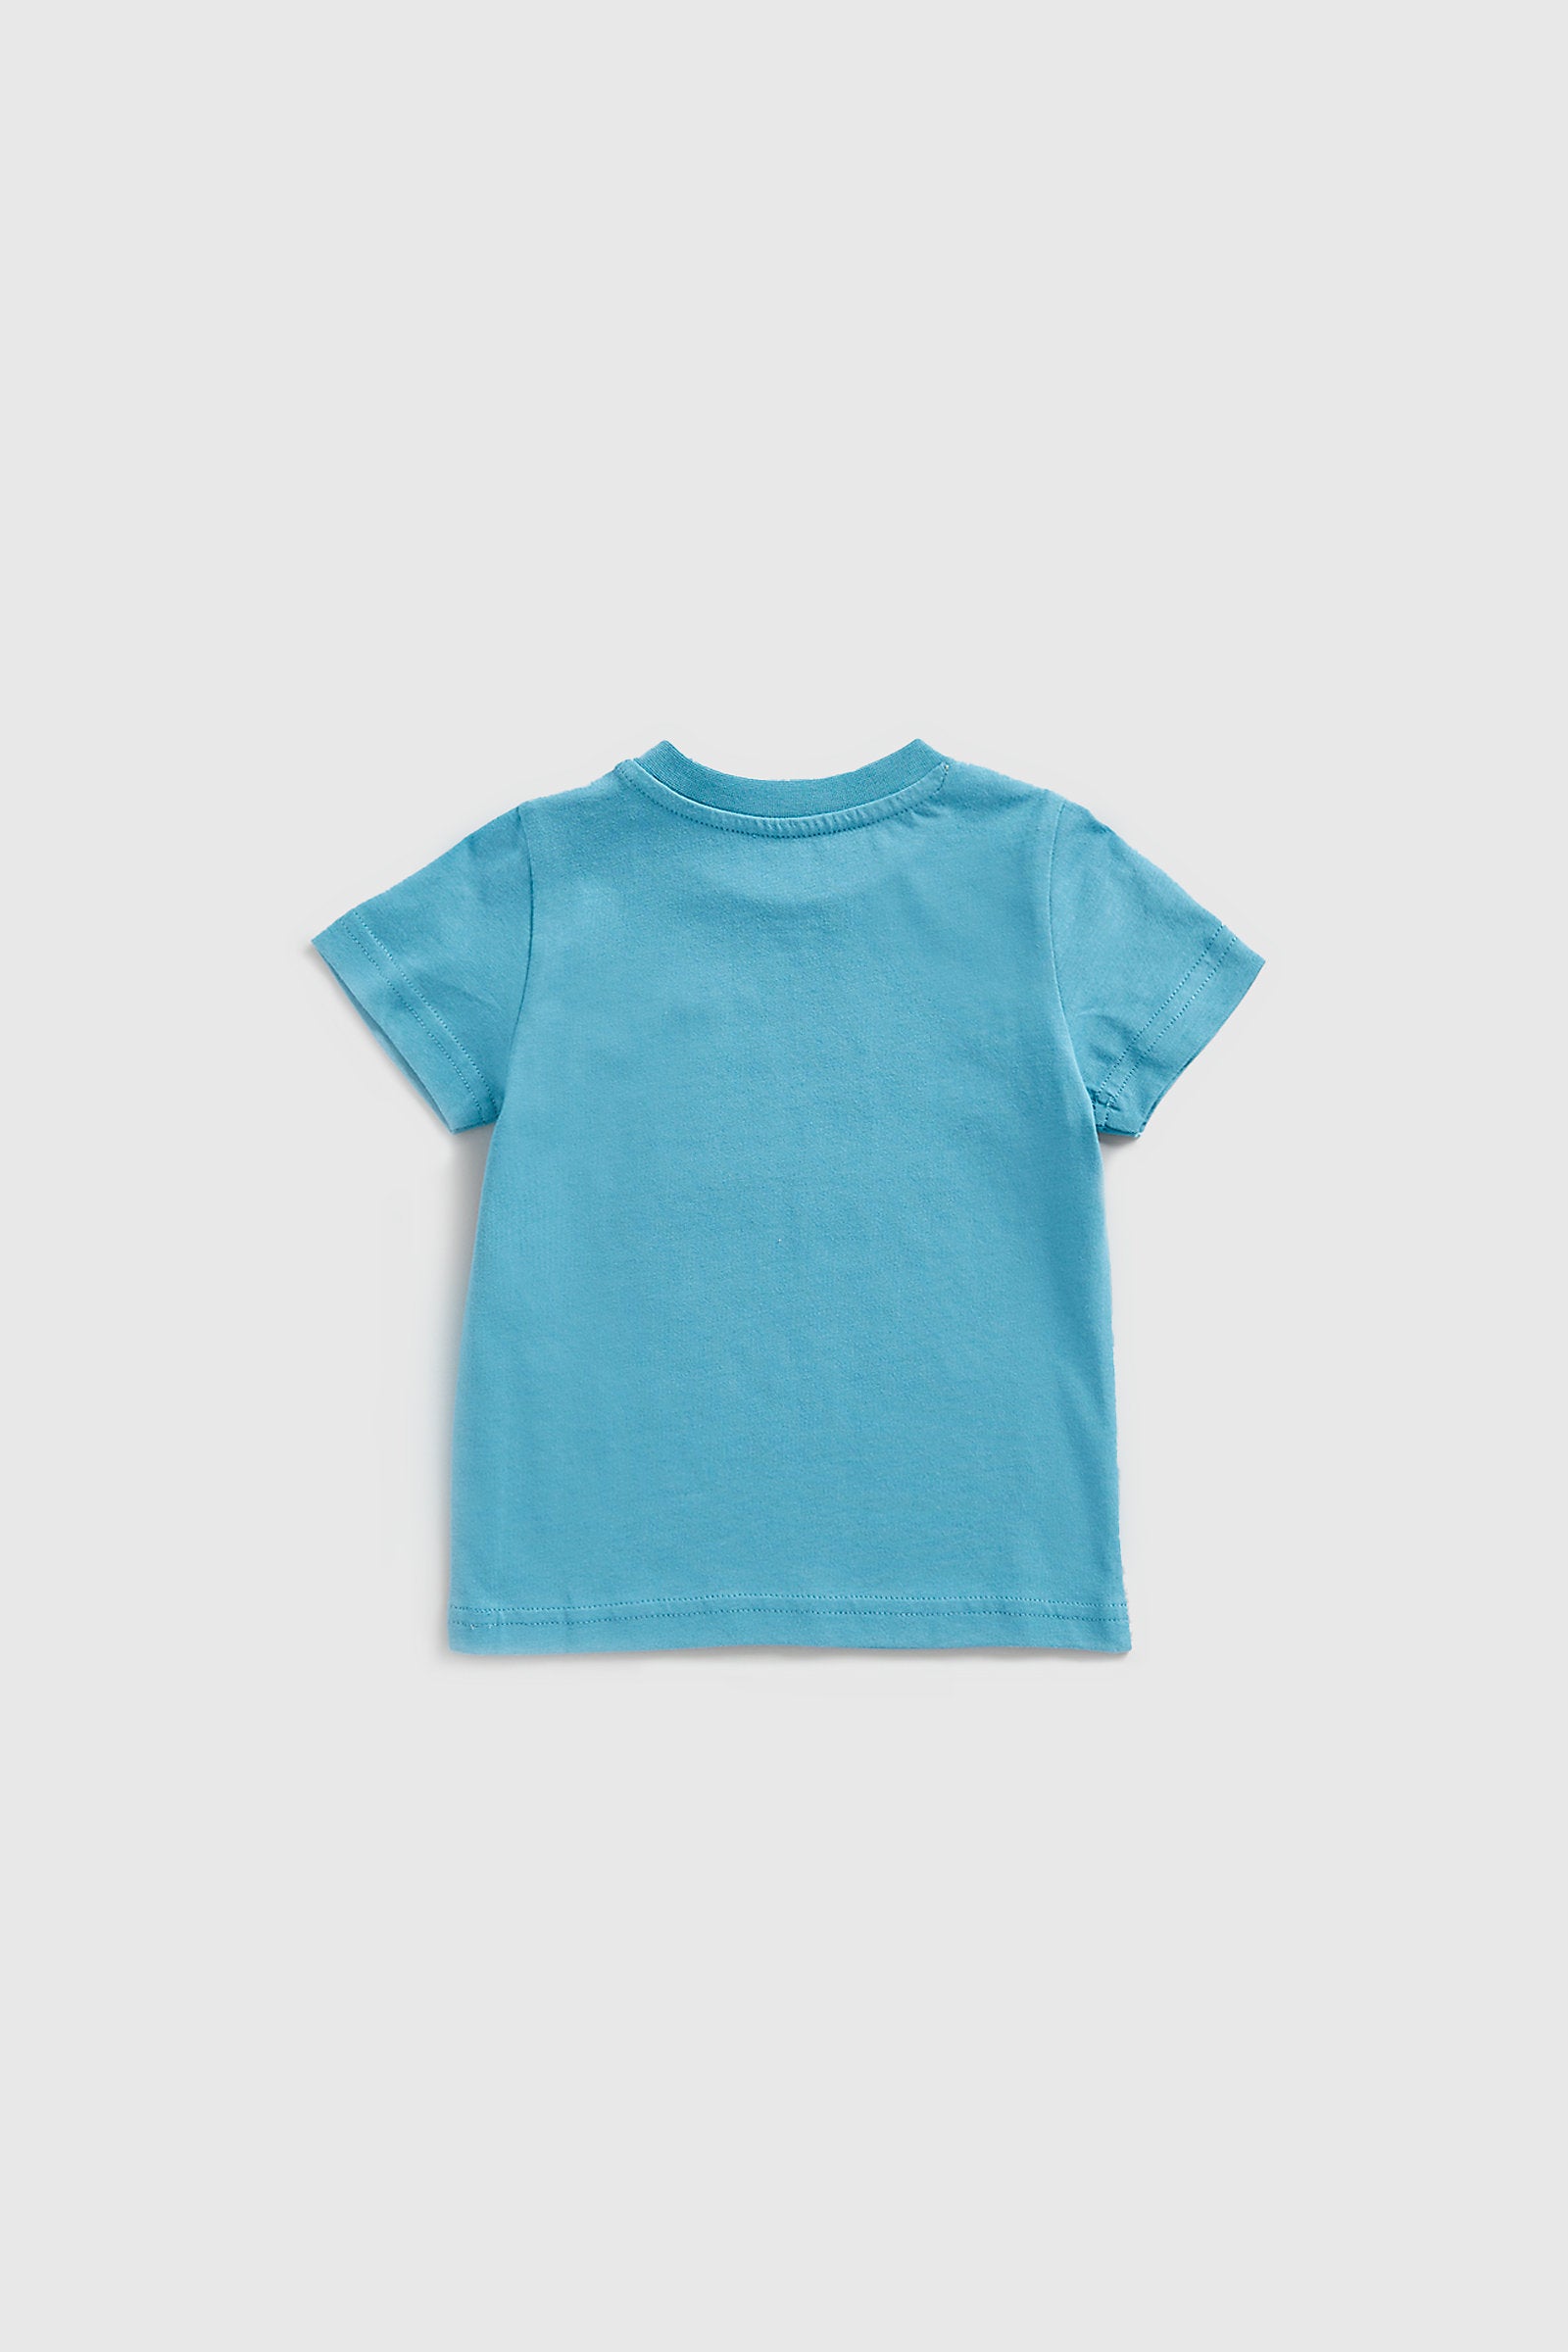 Mothercare Digger T-Shirt